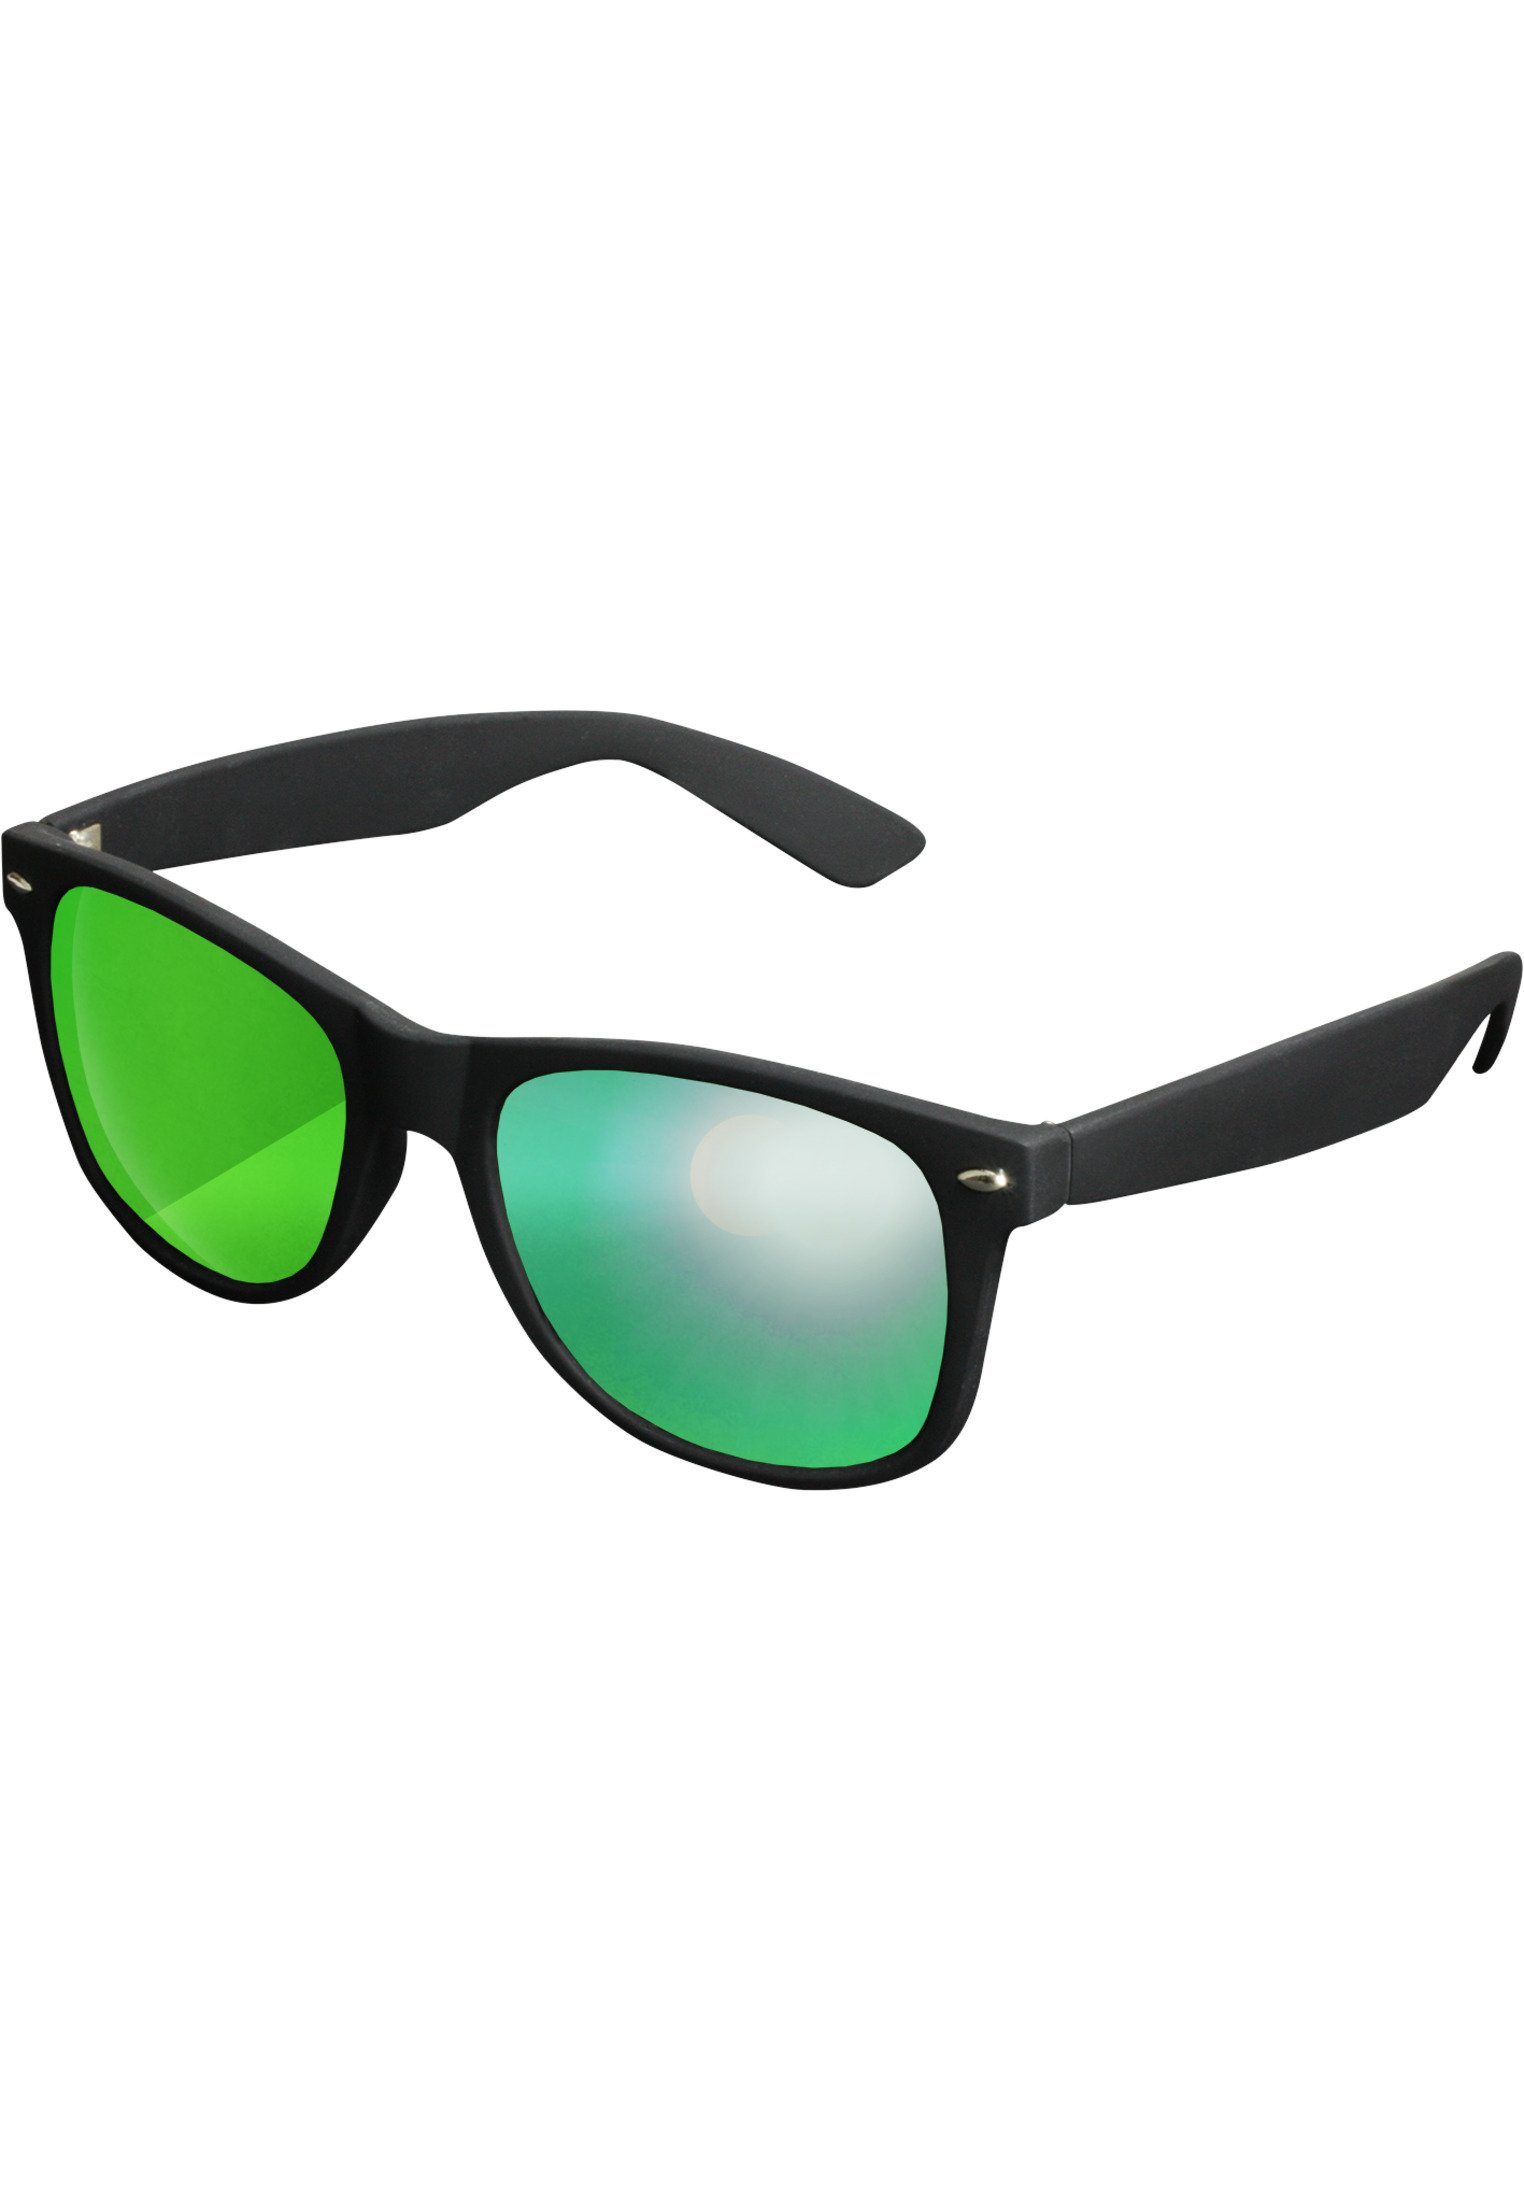 MSTRDS Likoma Mirror blk/grn Sunglasses Accessoires Sonnenbrille